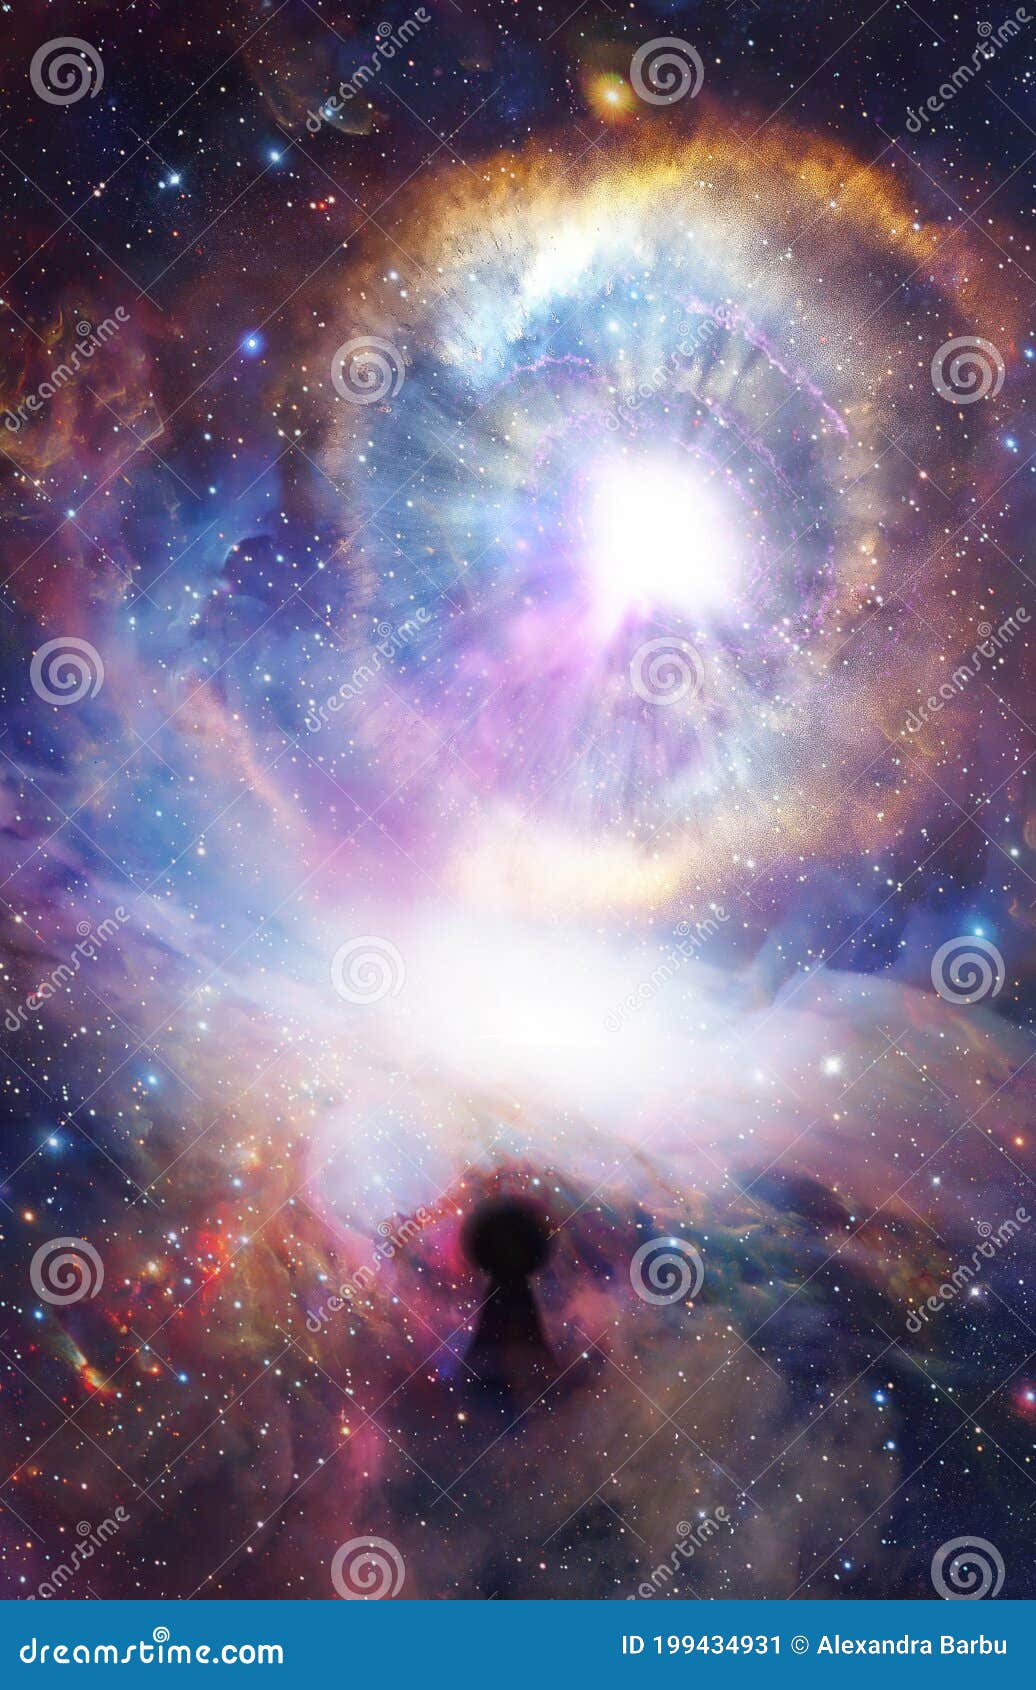 glowing universal portal, infinite love, life, source, soul journey through universe doorway, keyhole